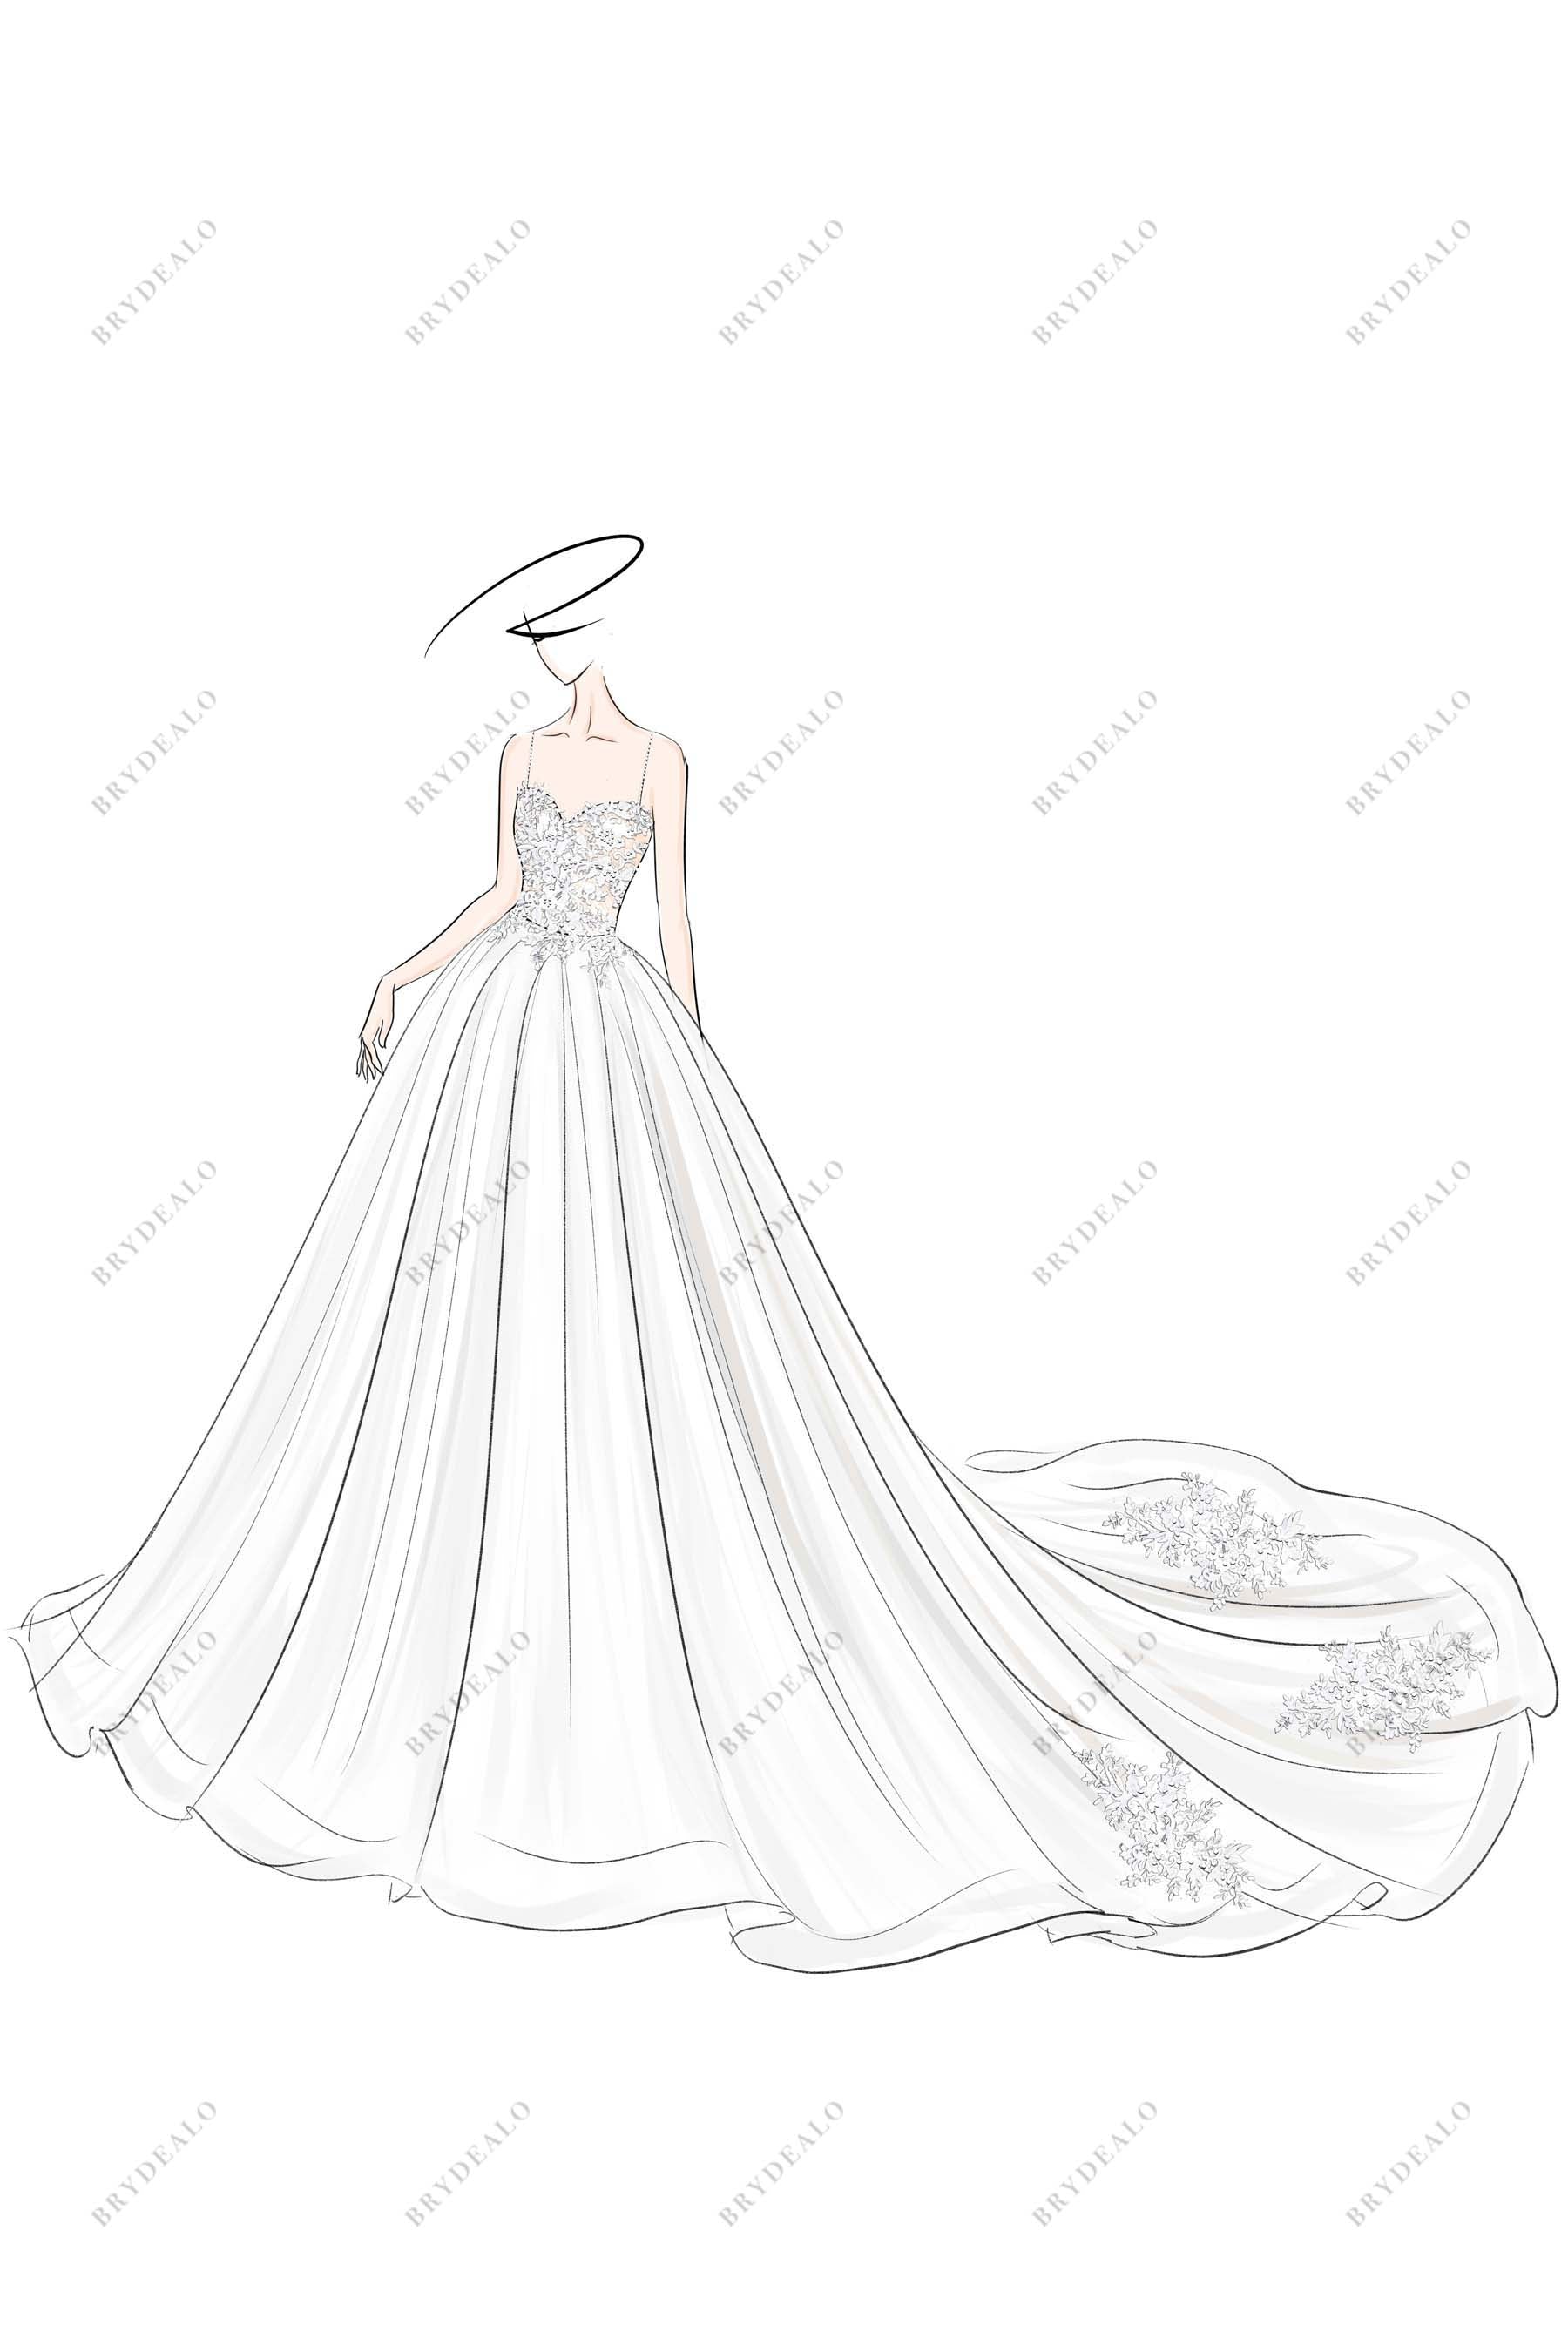 Girl in Gown Sketch - Stock Illustration [12983266] - PIXTA